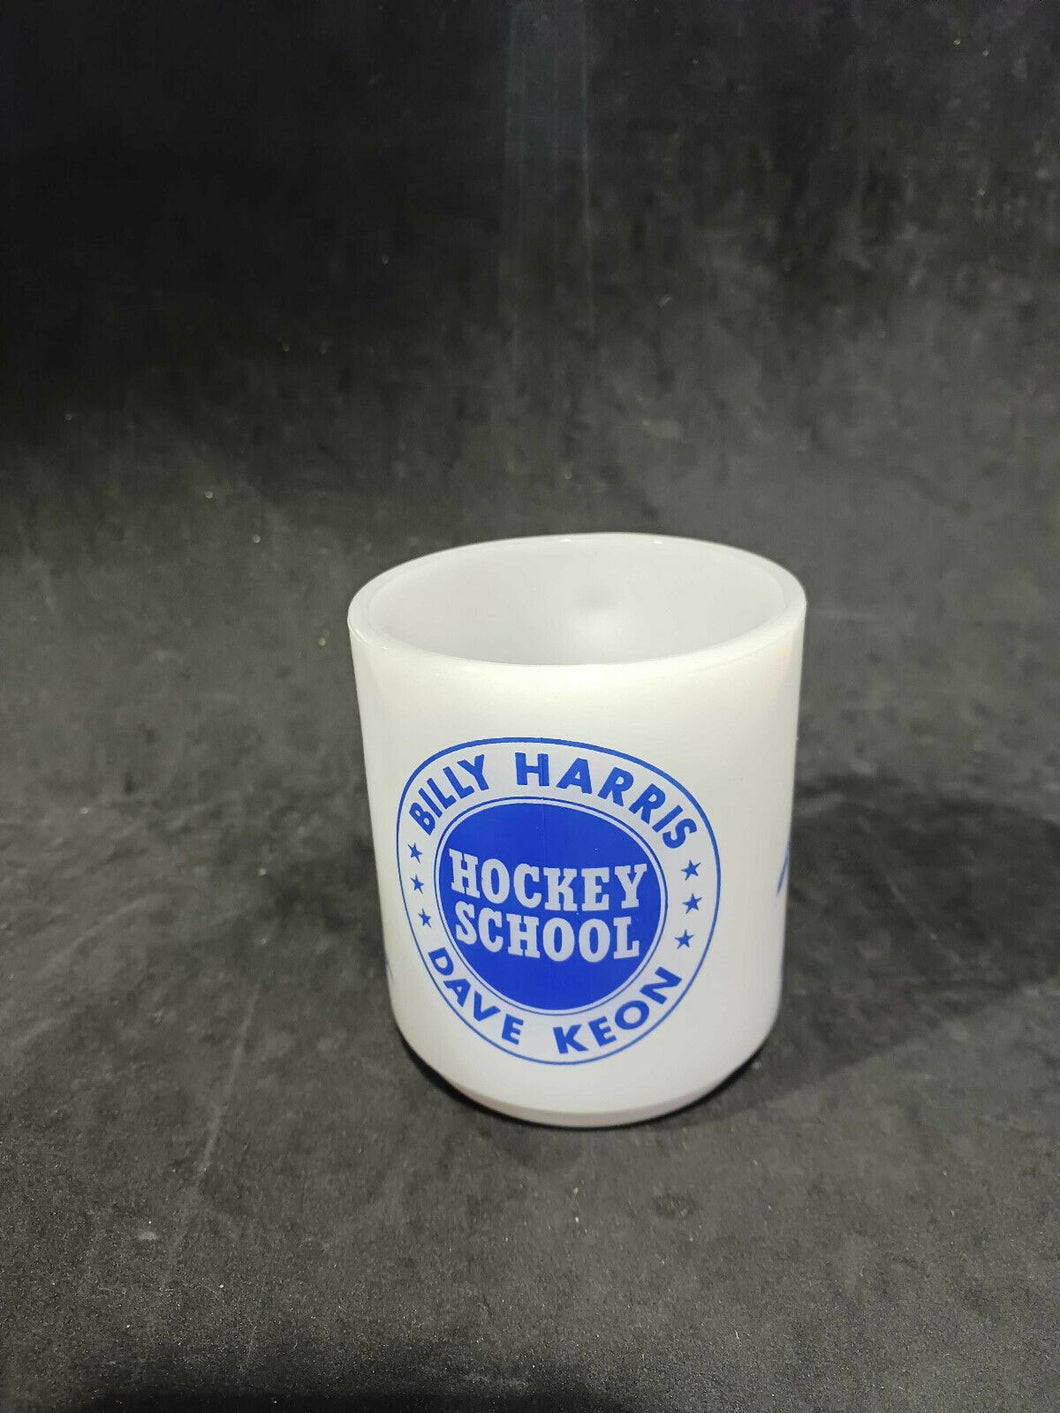 Billy Harris Dave Keon Hockey School Mug